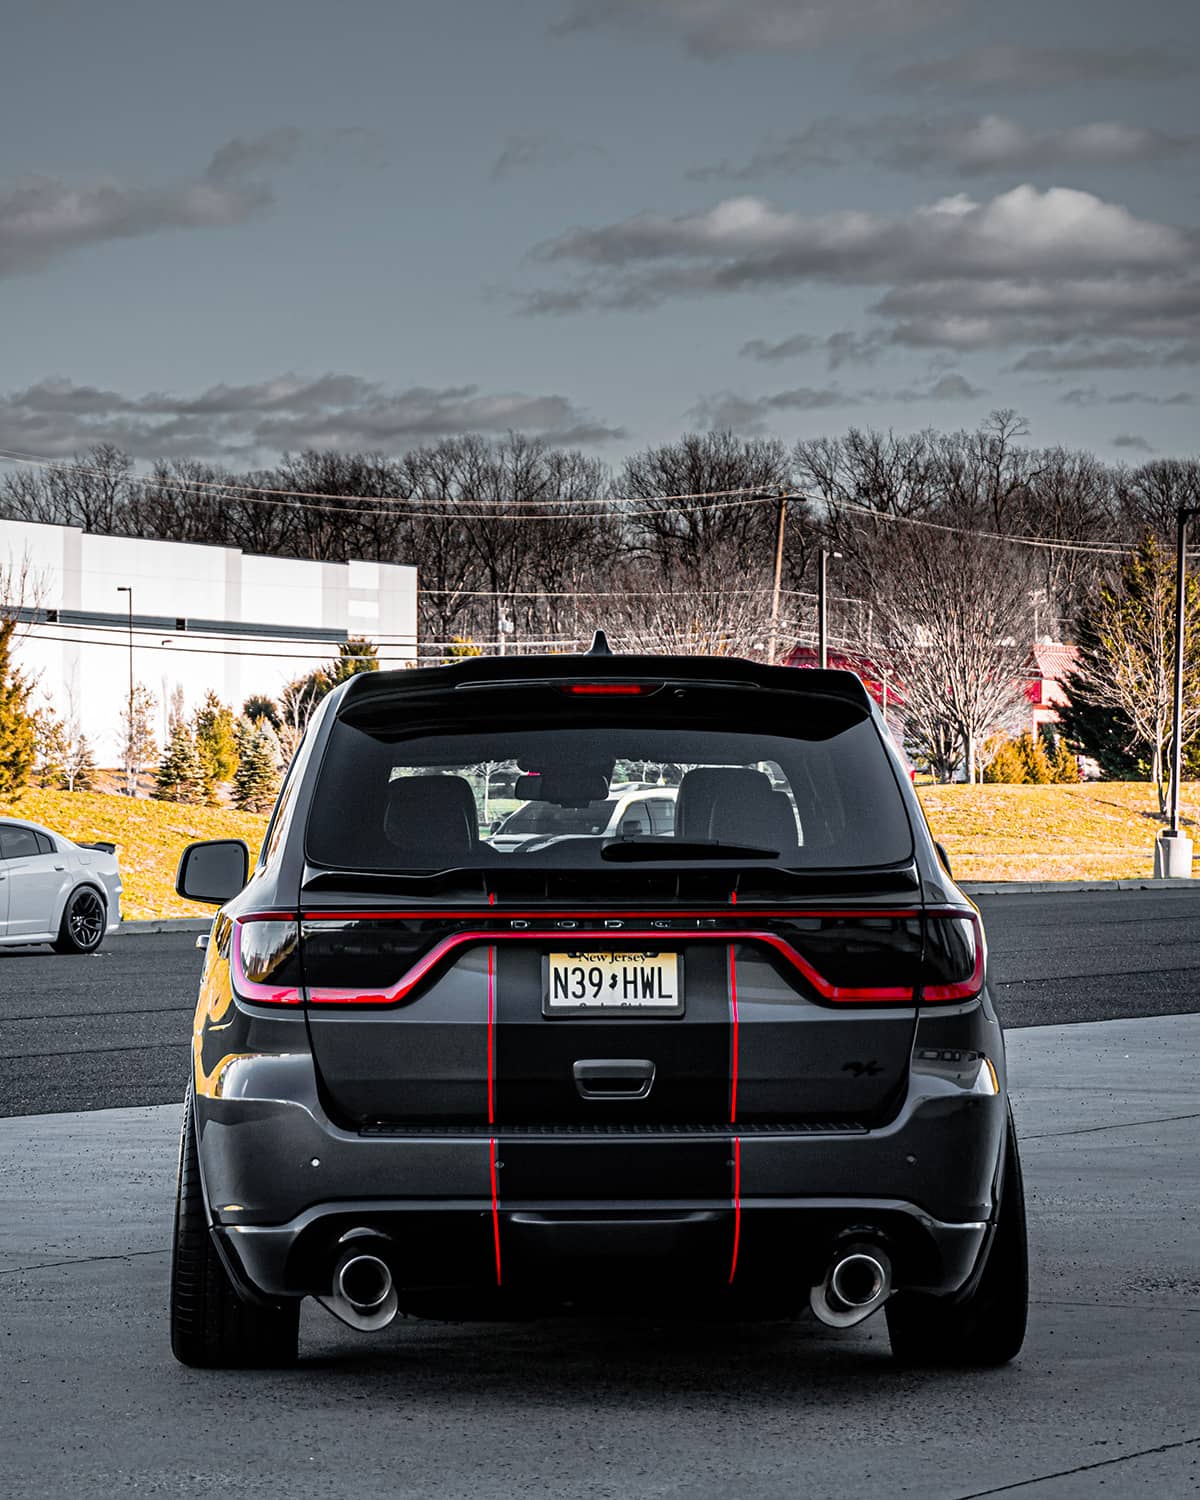 2016 Dodge Durango R/T with GridReady taillight Tint kit